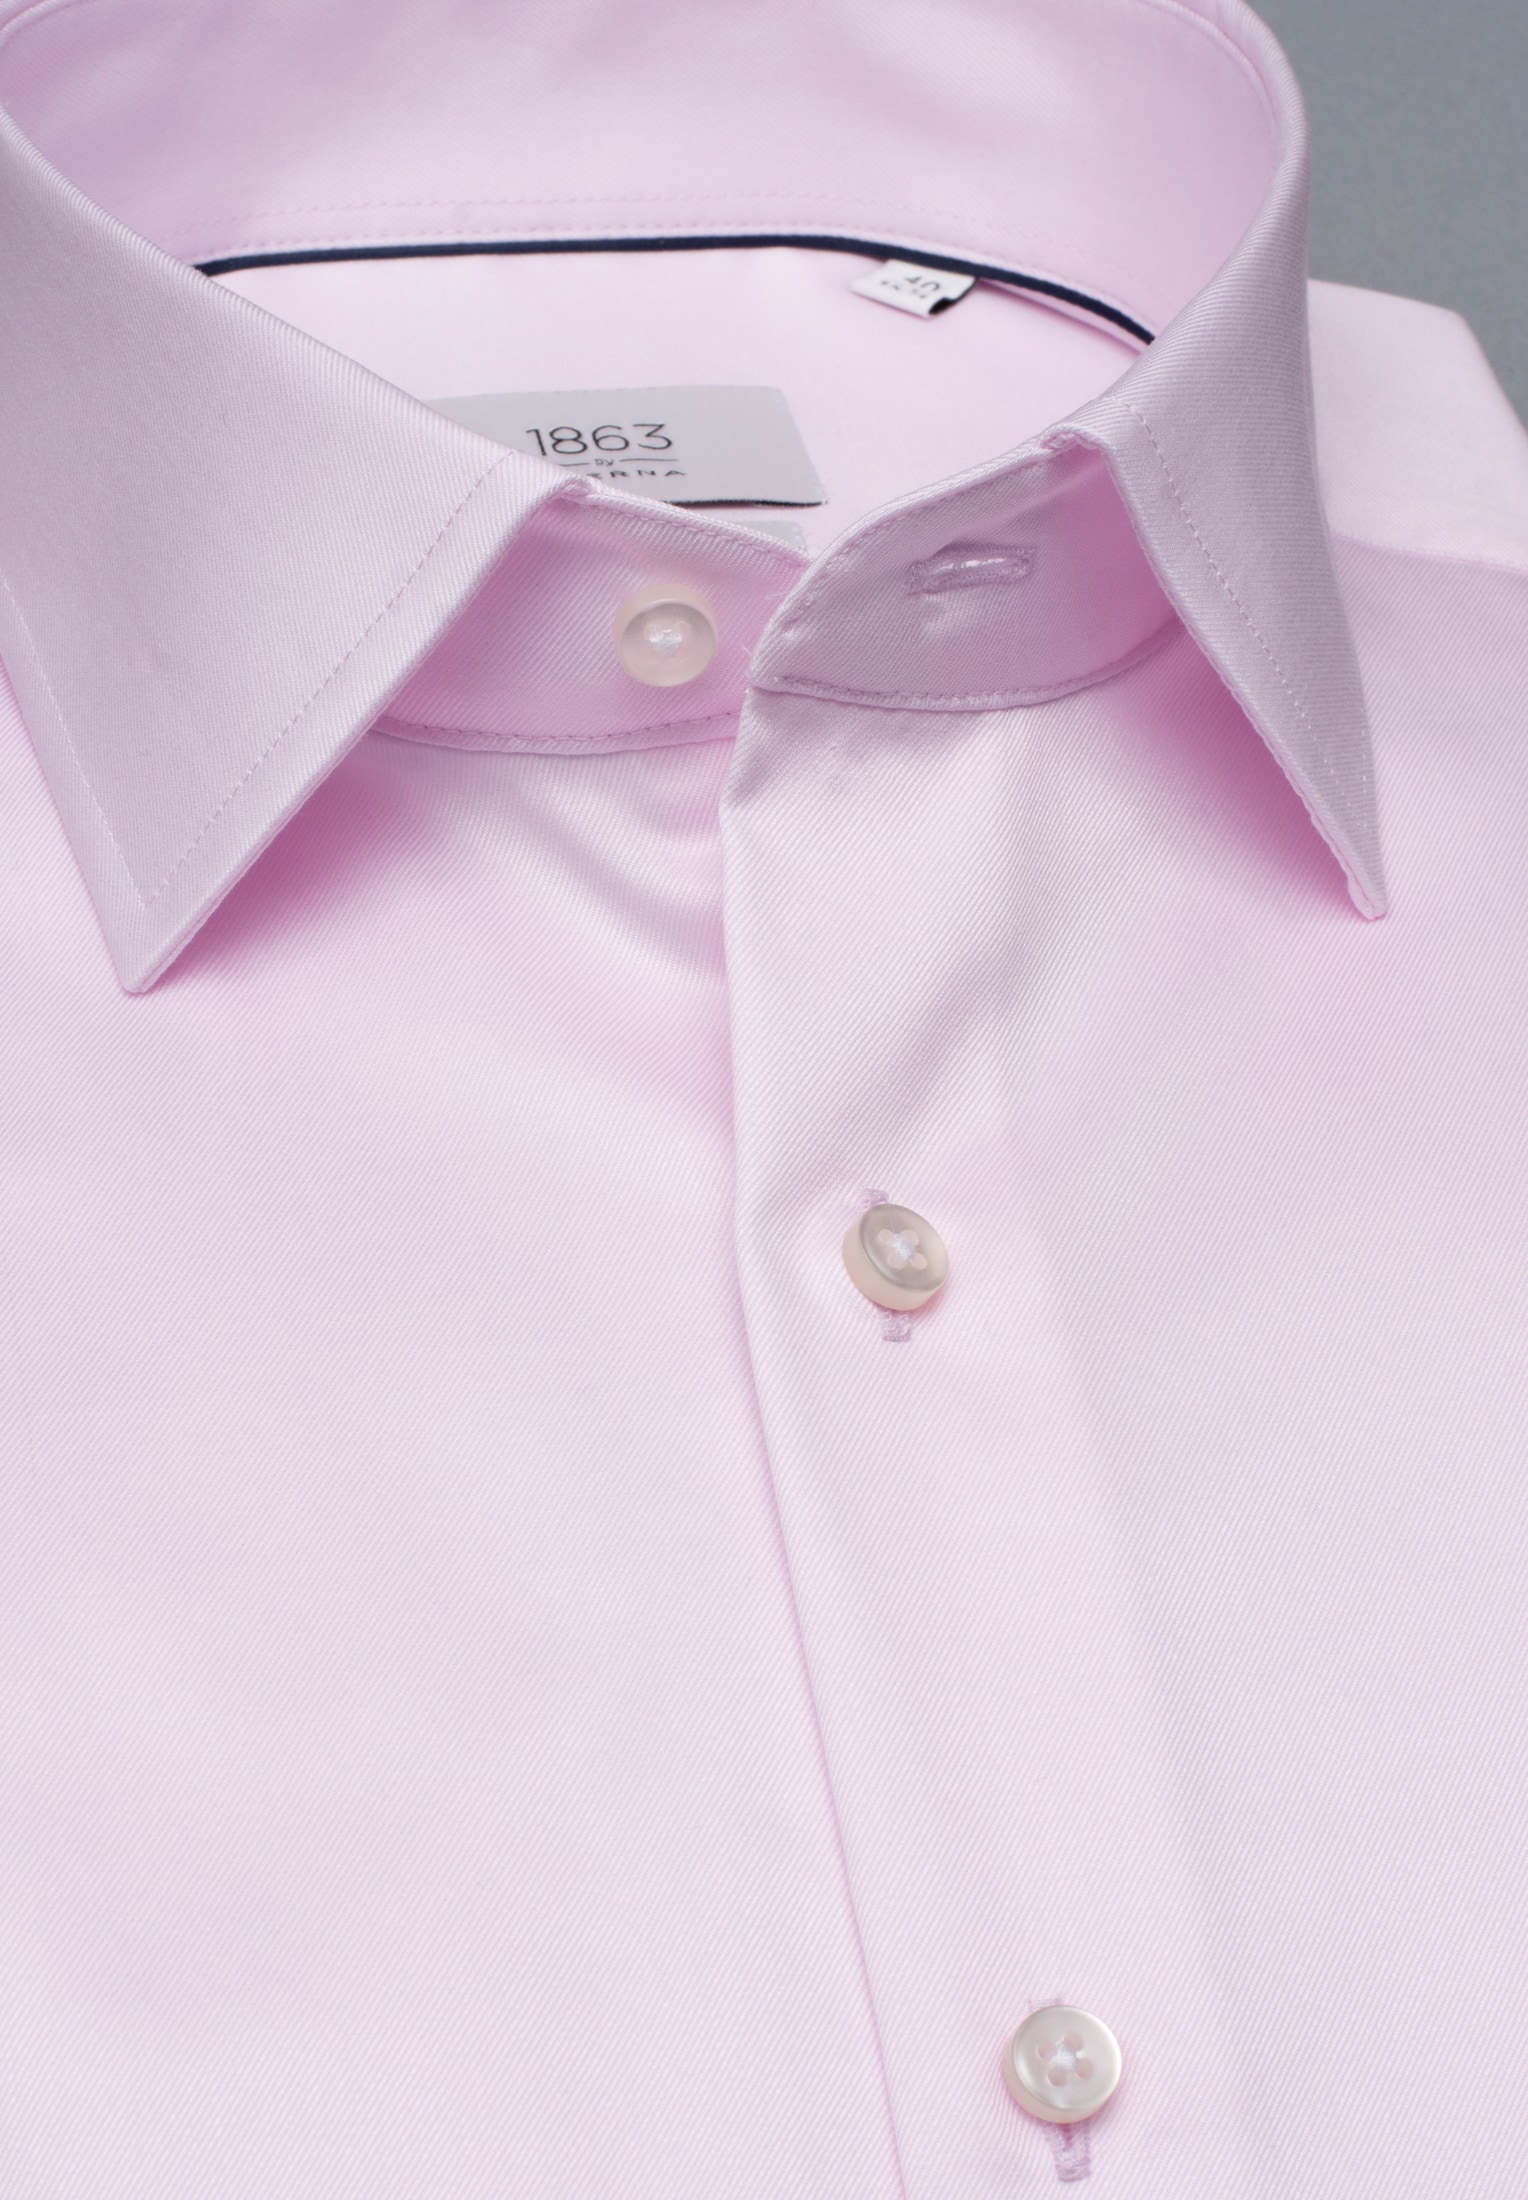 COMFORT FIT Luxury Shirt in rubinrot | 43 | unifarben 1SH00739-05-51-43-1/1 | | Langarm rubinrot